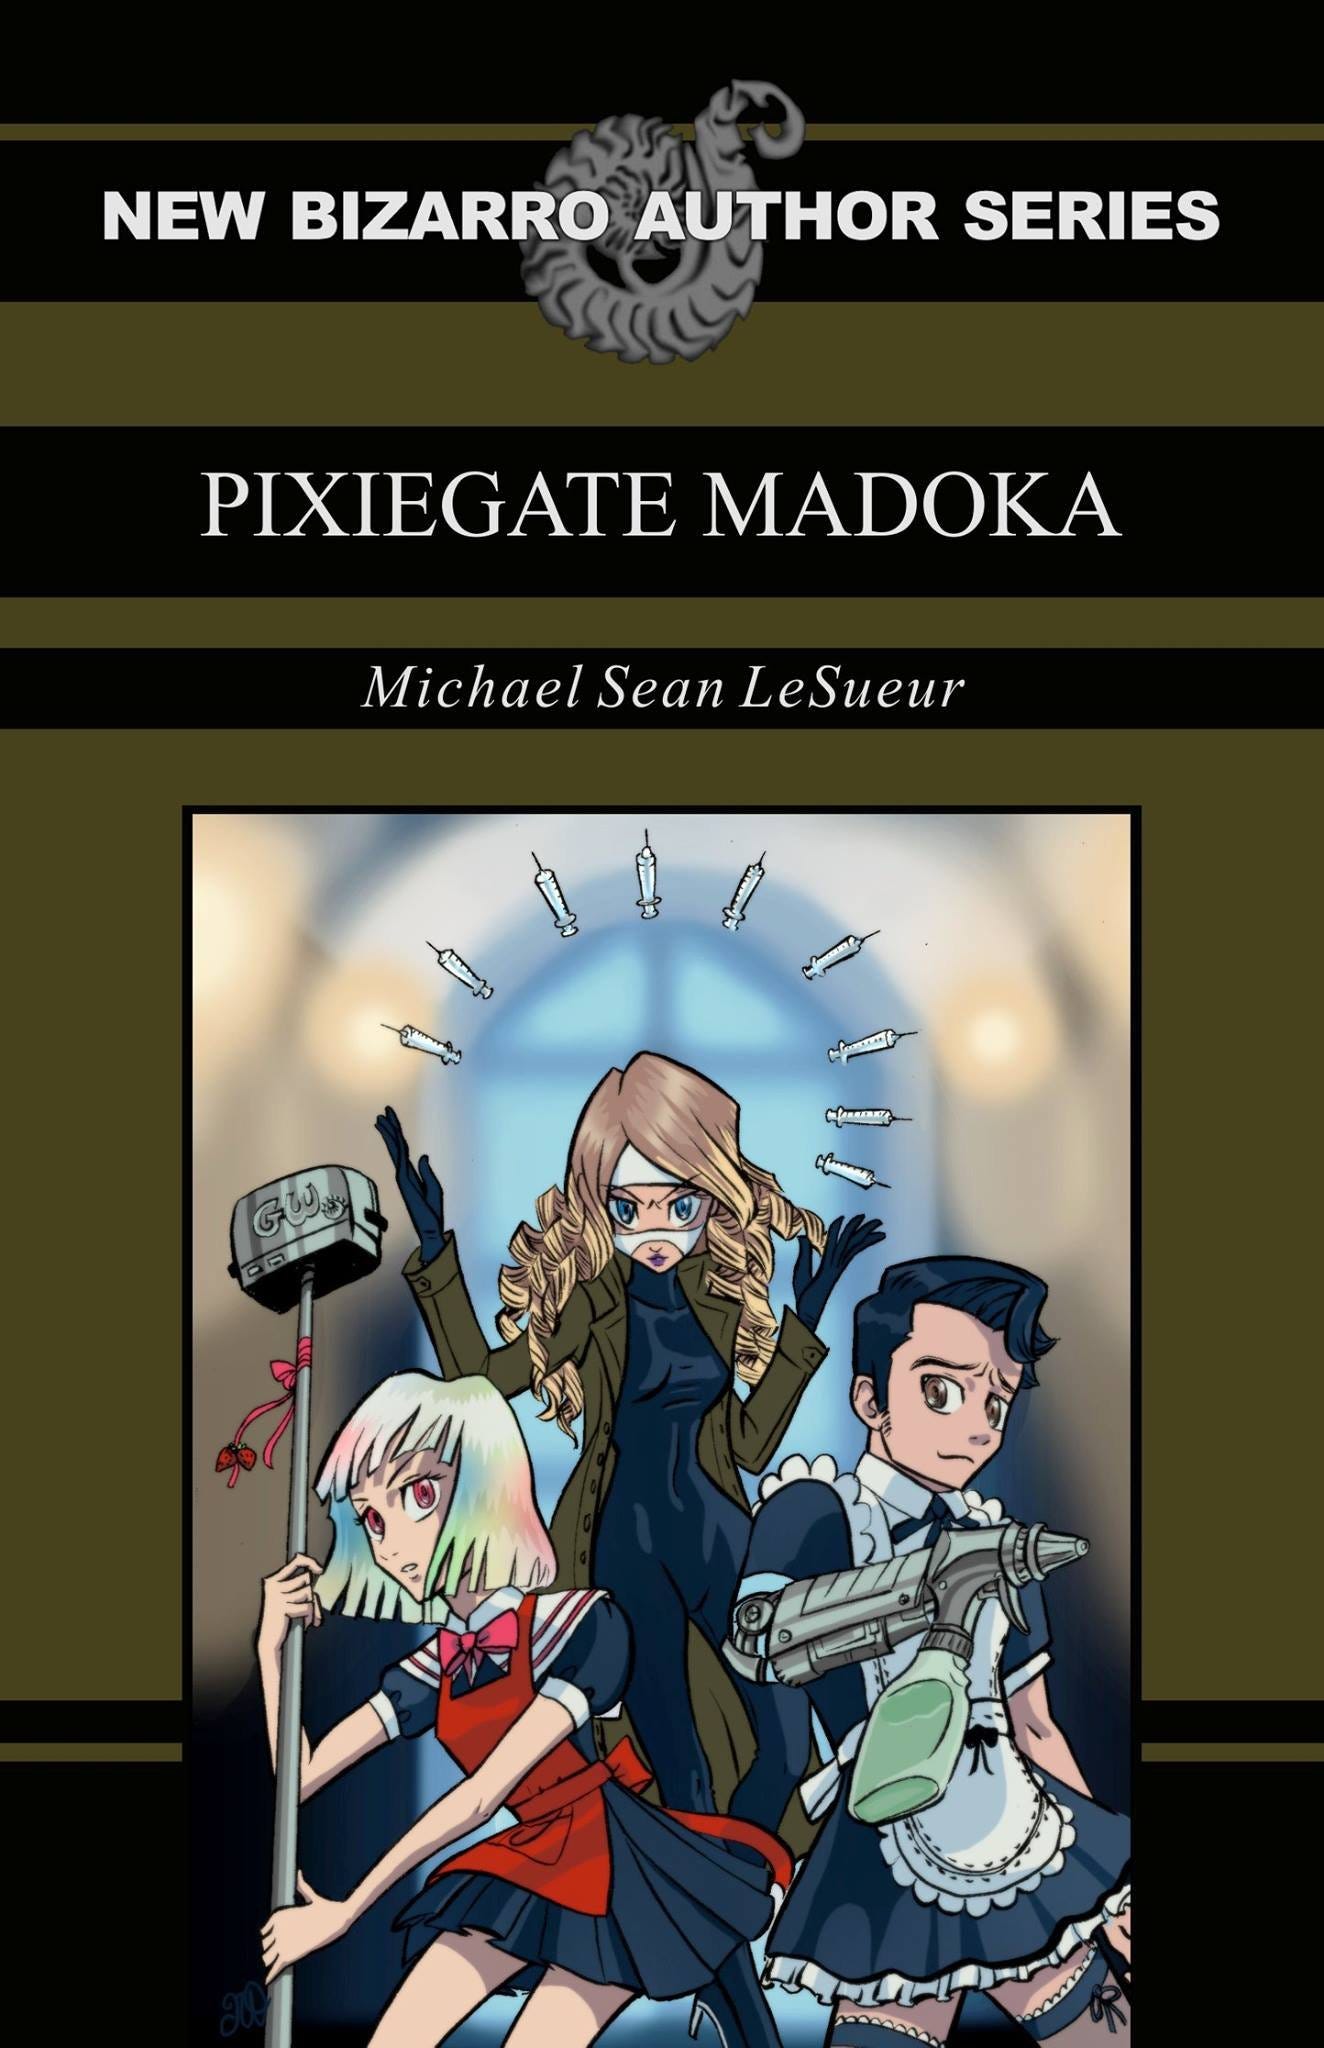 Book Review: Pixiegate Madoka by Michael Sean LeSueur, by Ben Arzate